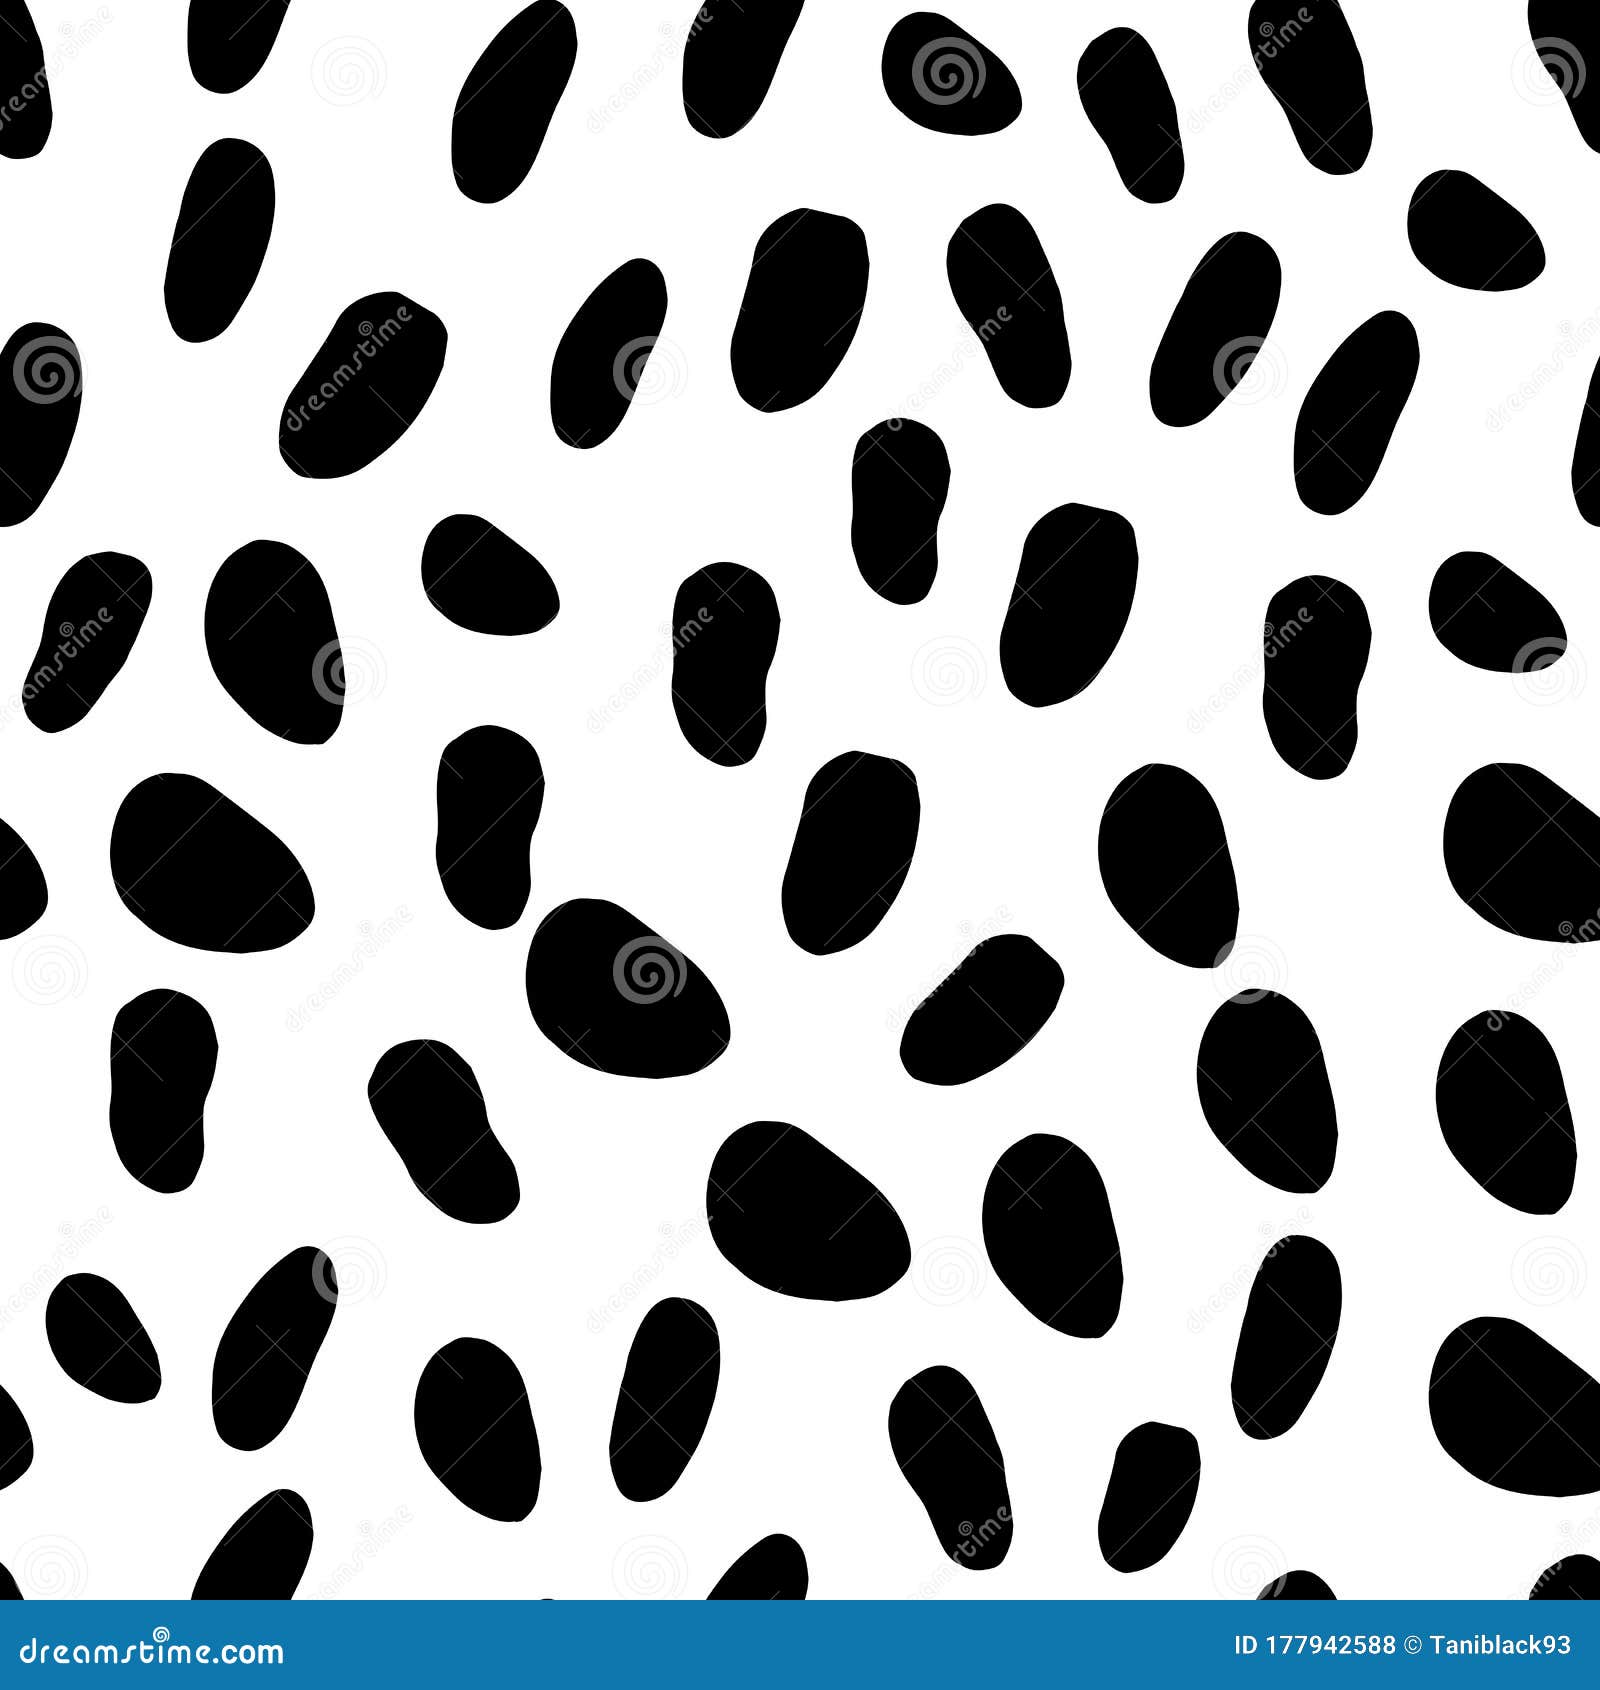 abstract seamless pattern with black spots on white. dalmatian skin imitation. animal print.  